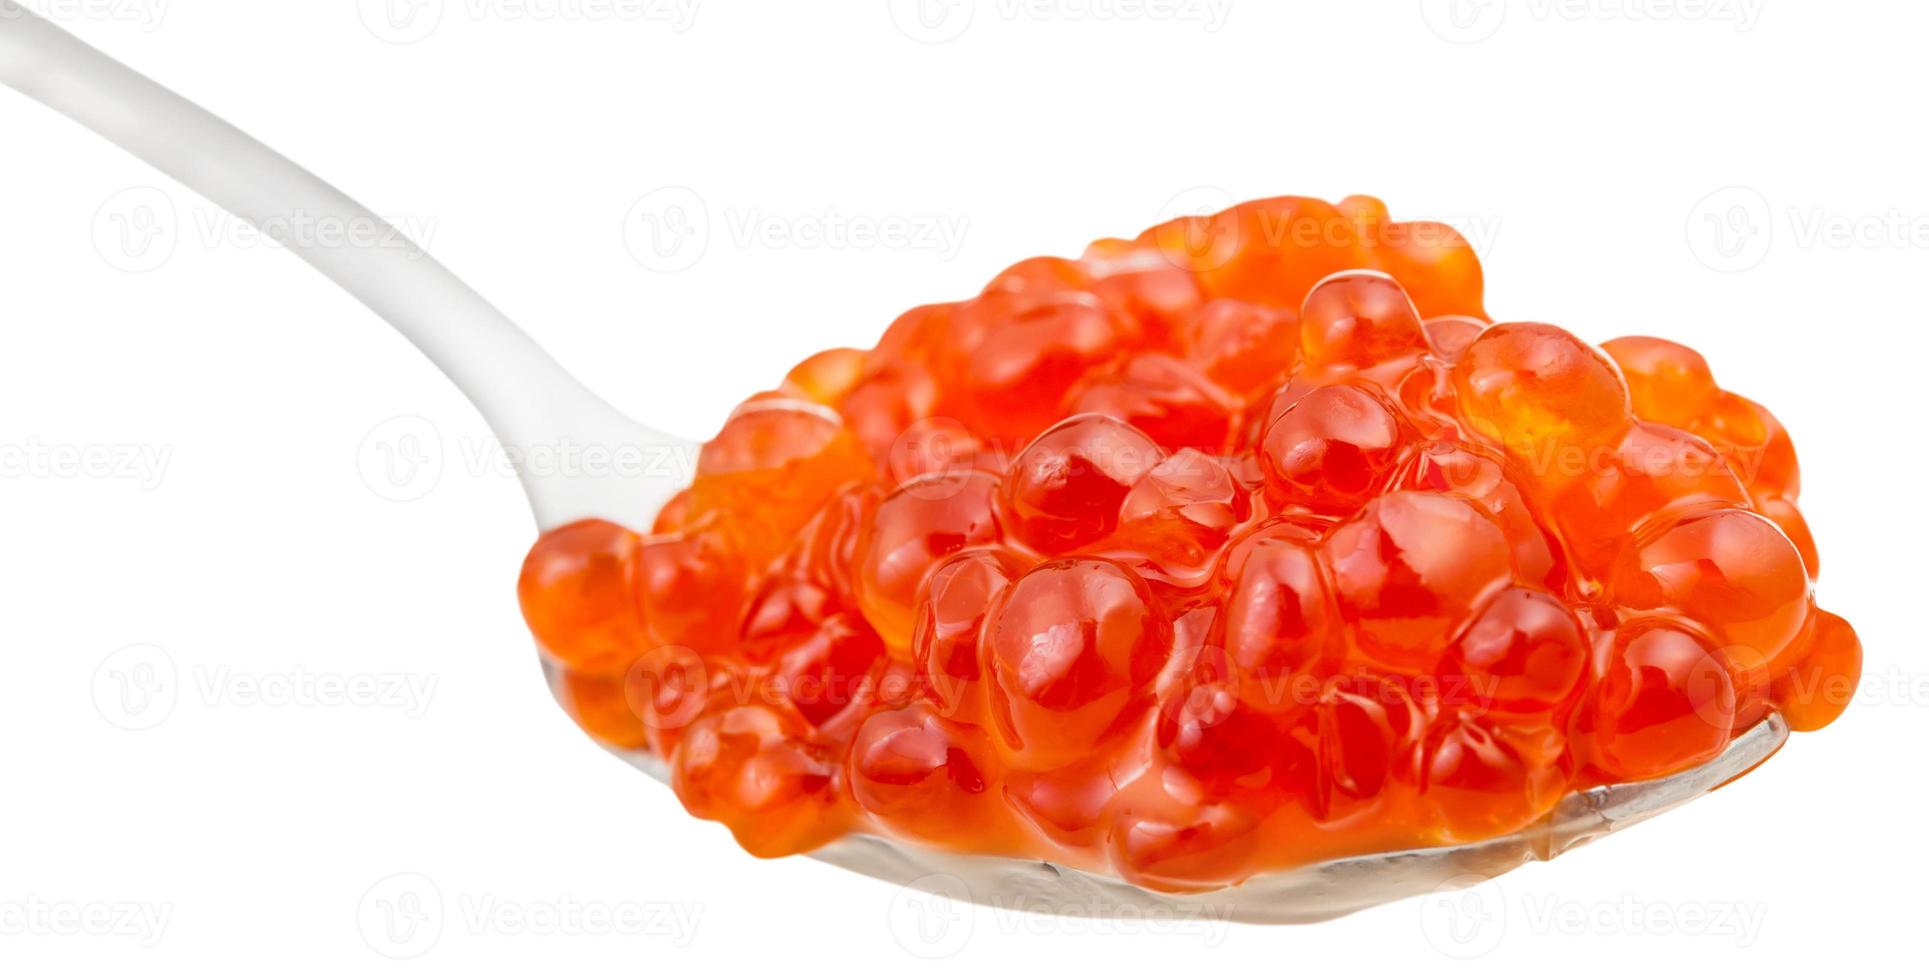 cuchara con trucha salmón caviar rojo cerrar foto